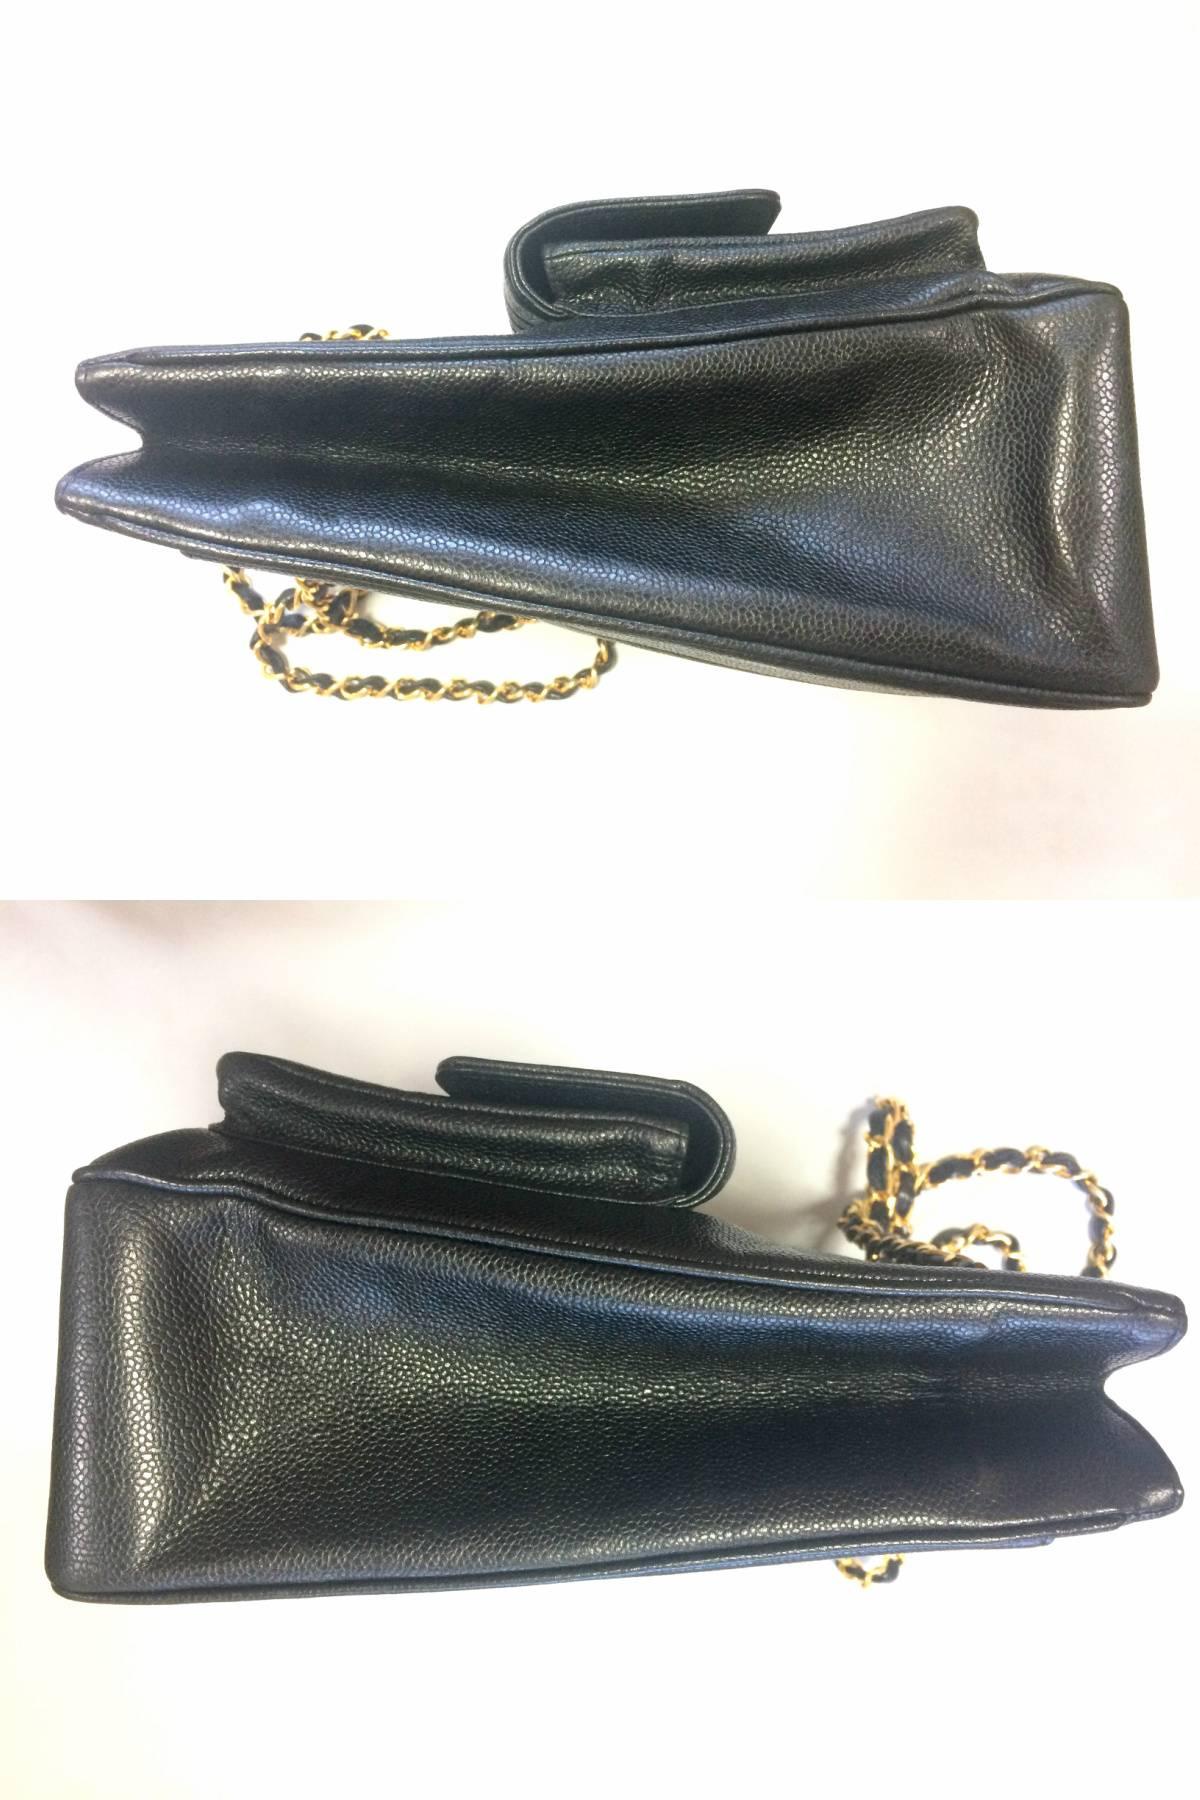 Vintage CHANEL rare 2.55 combo design black caviar leather chain shoulder bag. 1